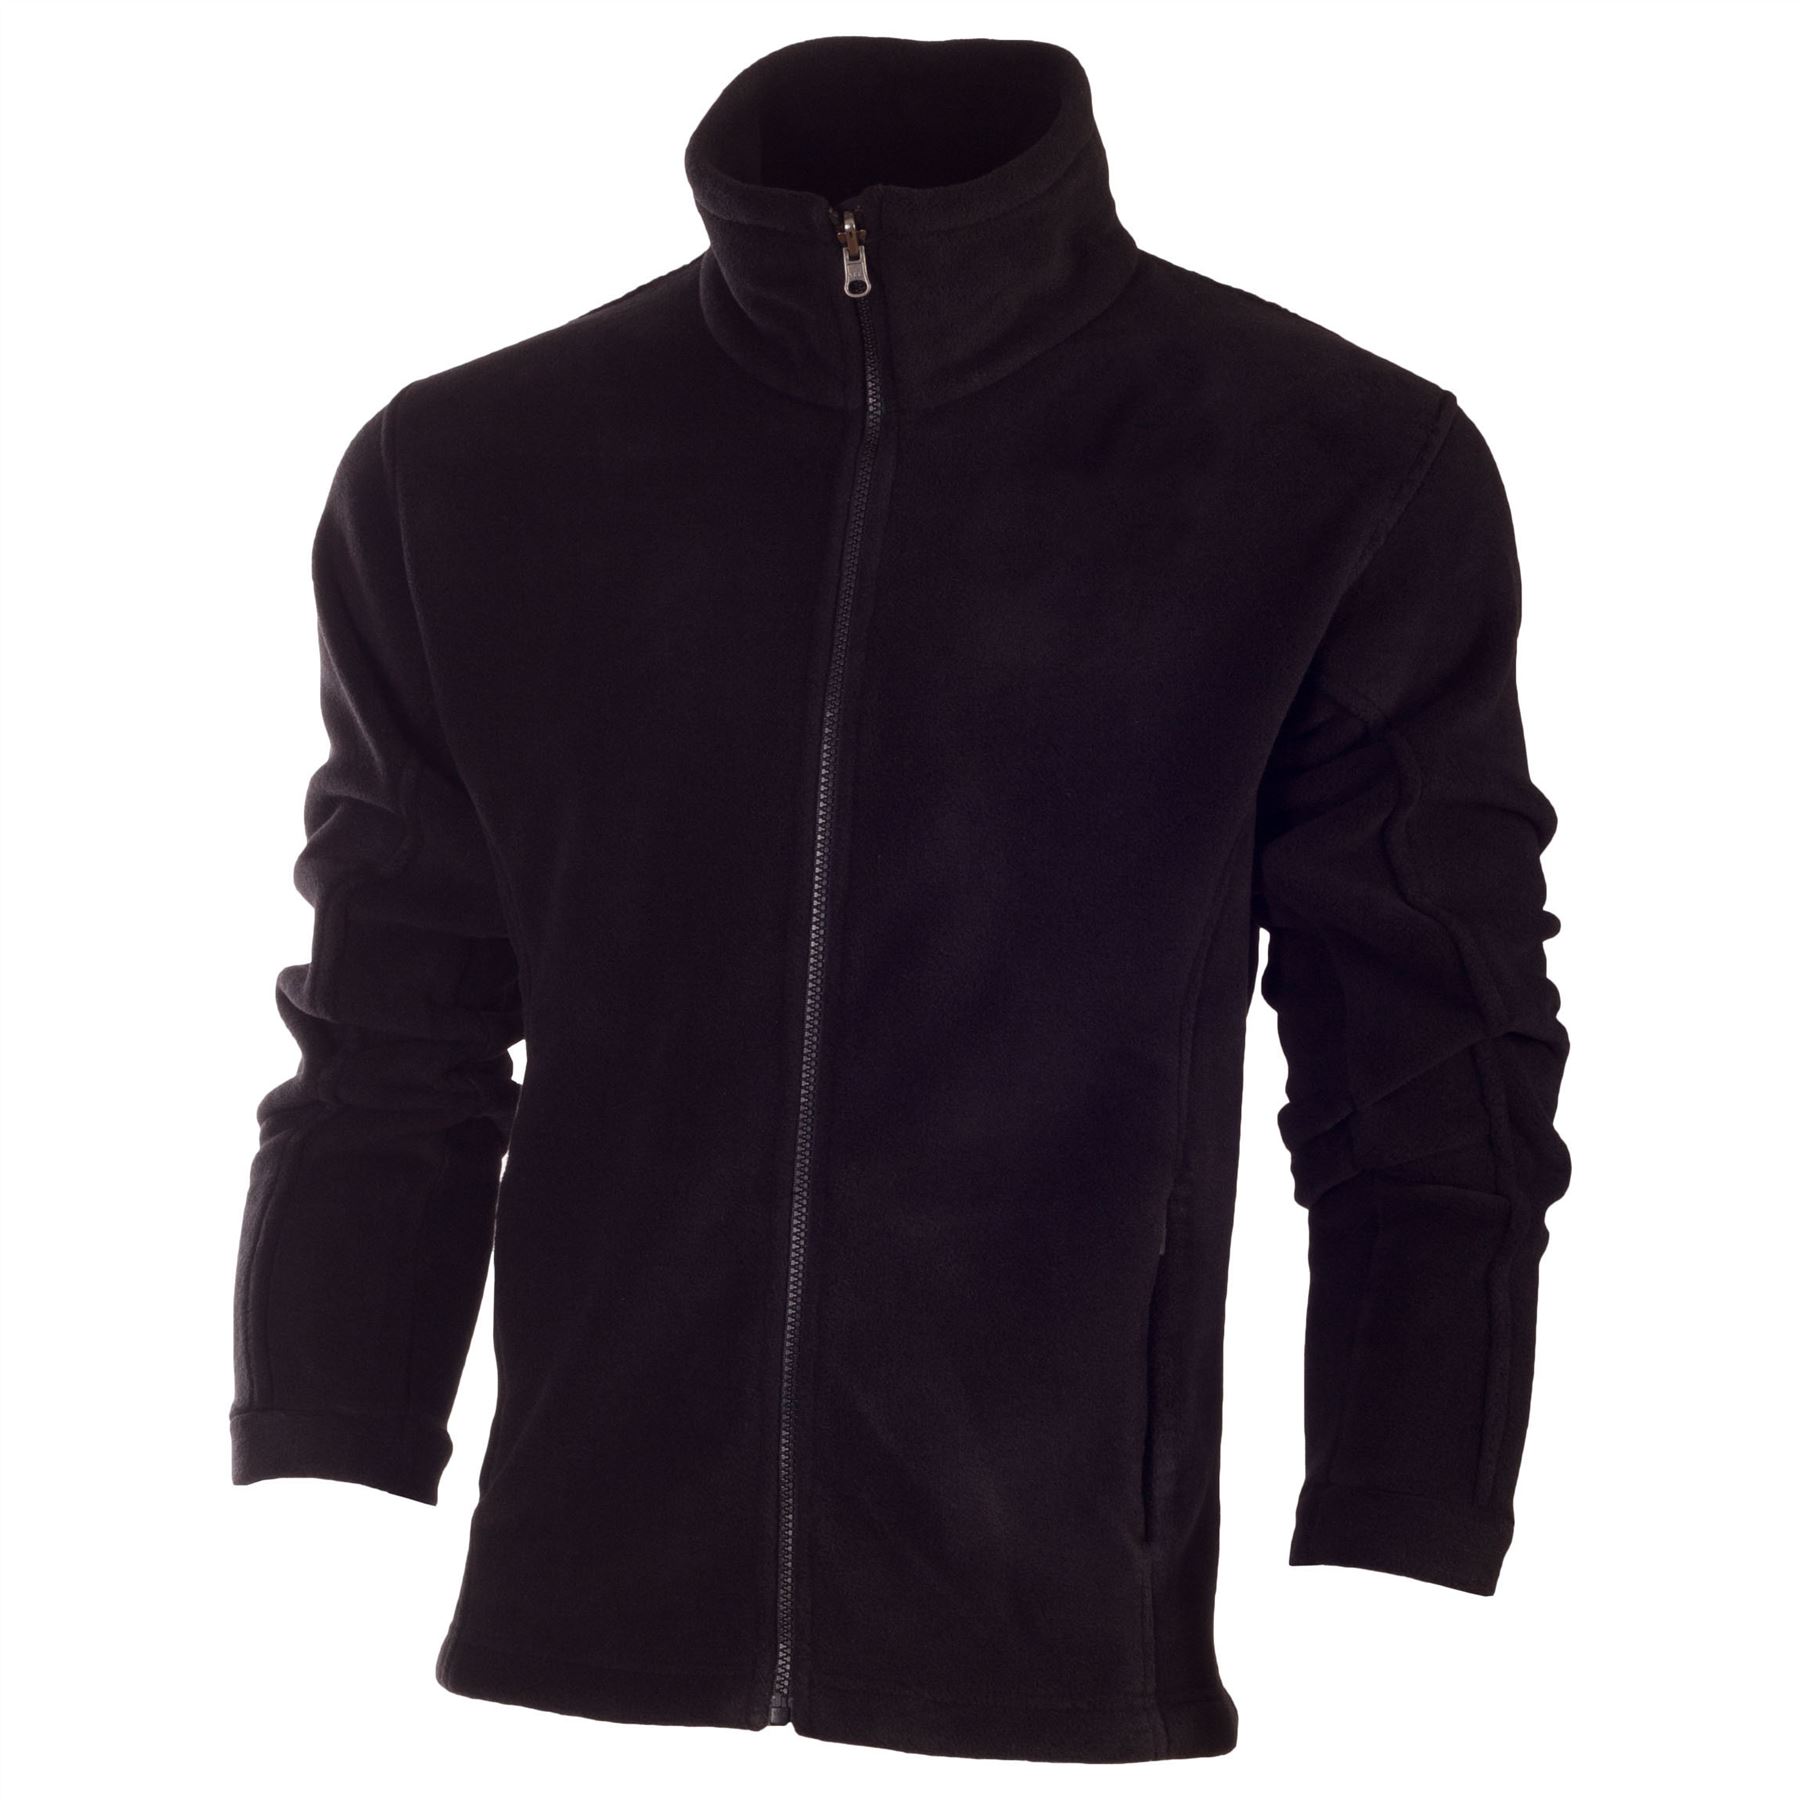 Unbranded Men's Plain Zip Up Long Sleeved Warm Running Jackets | eBay